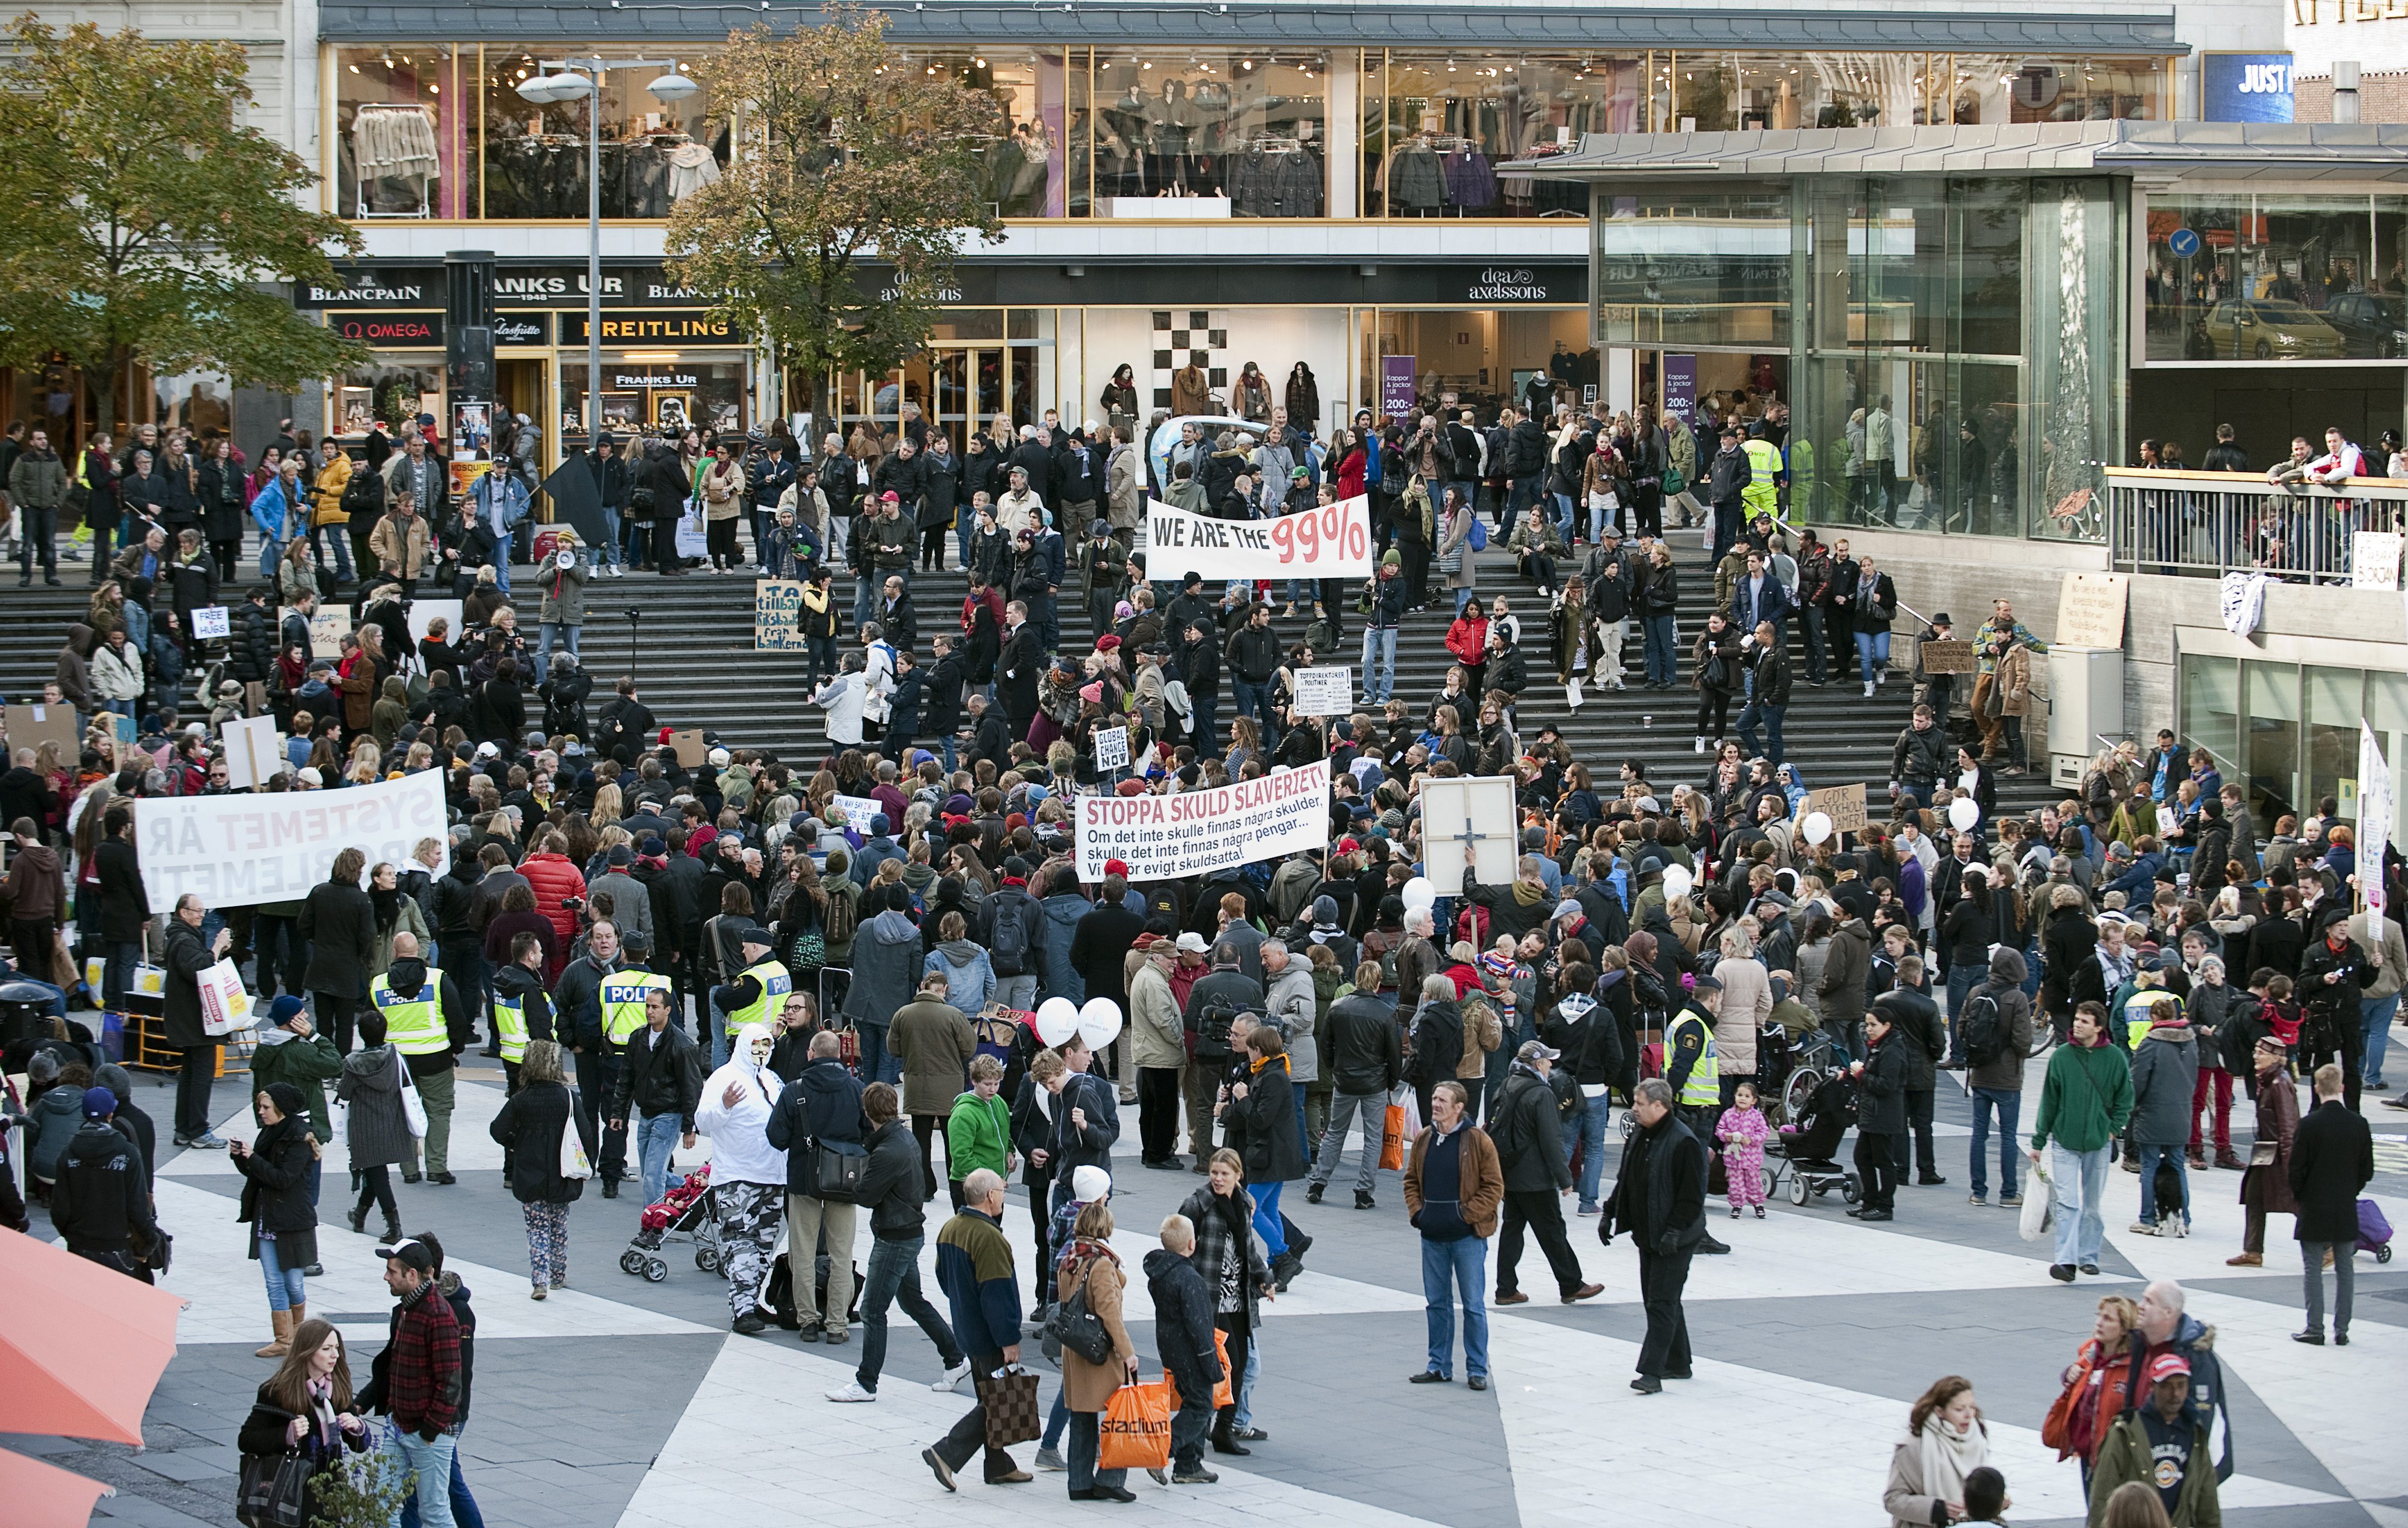 Ekonomi, Occupy Stockholm, Sergels Torg, Demonstration, Occupy, Politik, Wall Street, Occupy Wall Street, Protester, USA